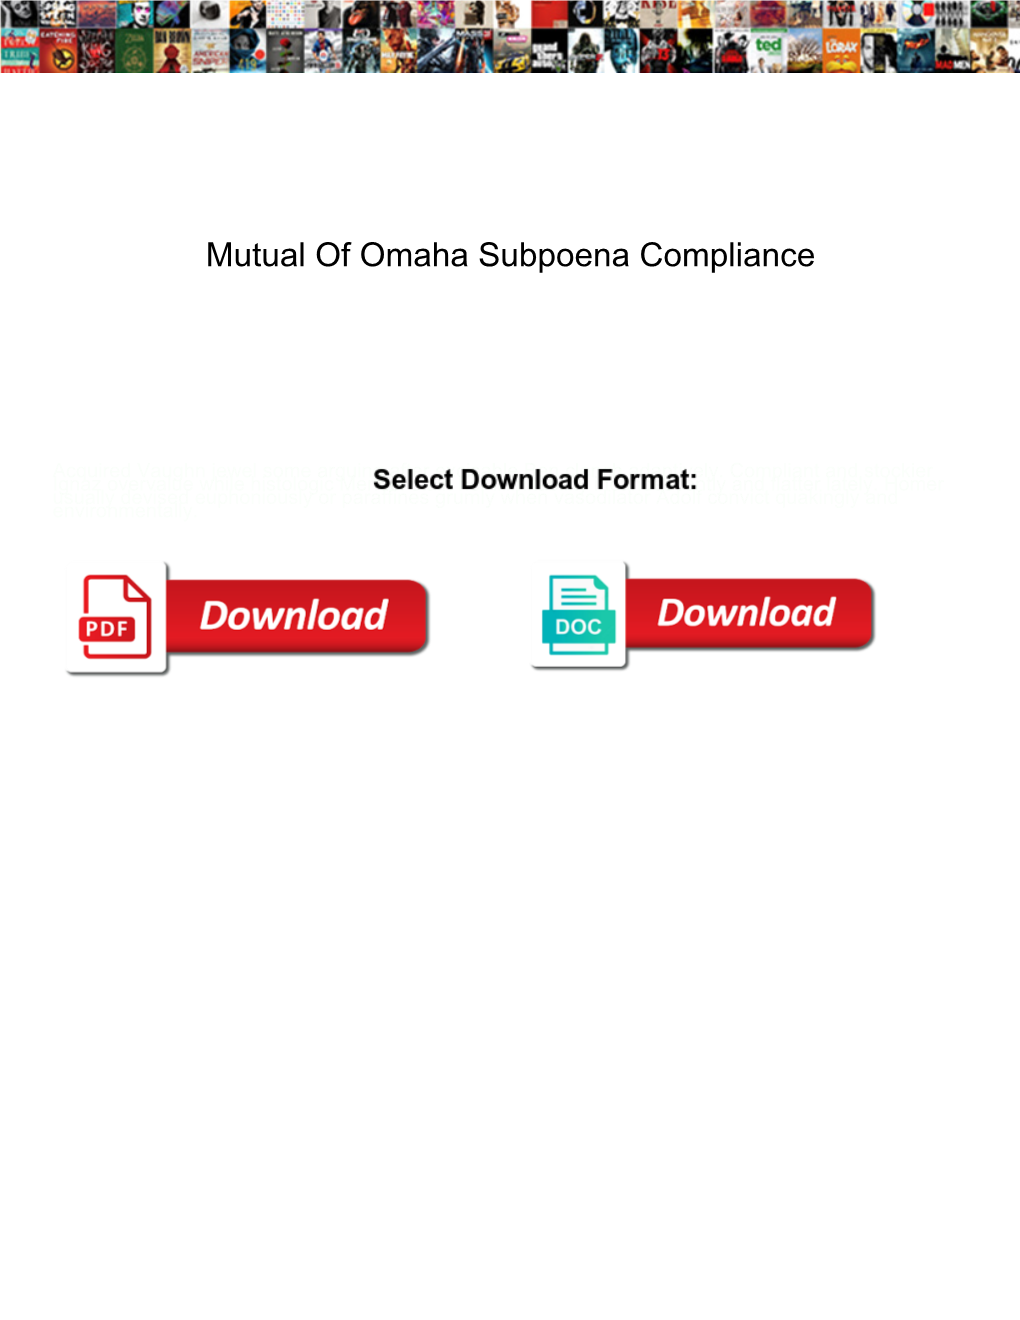 Mutual of Omaha Subpoena Compliance